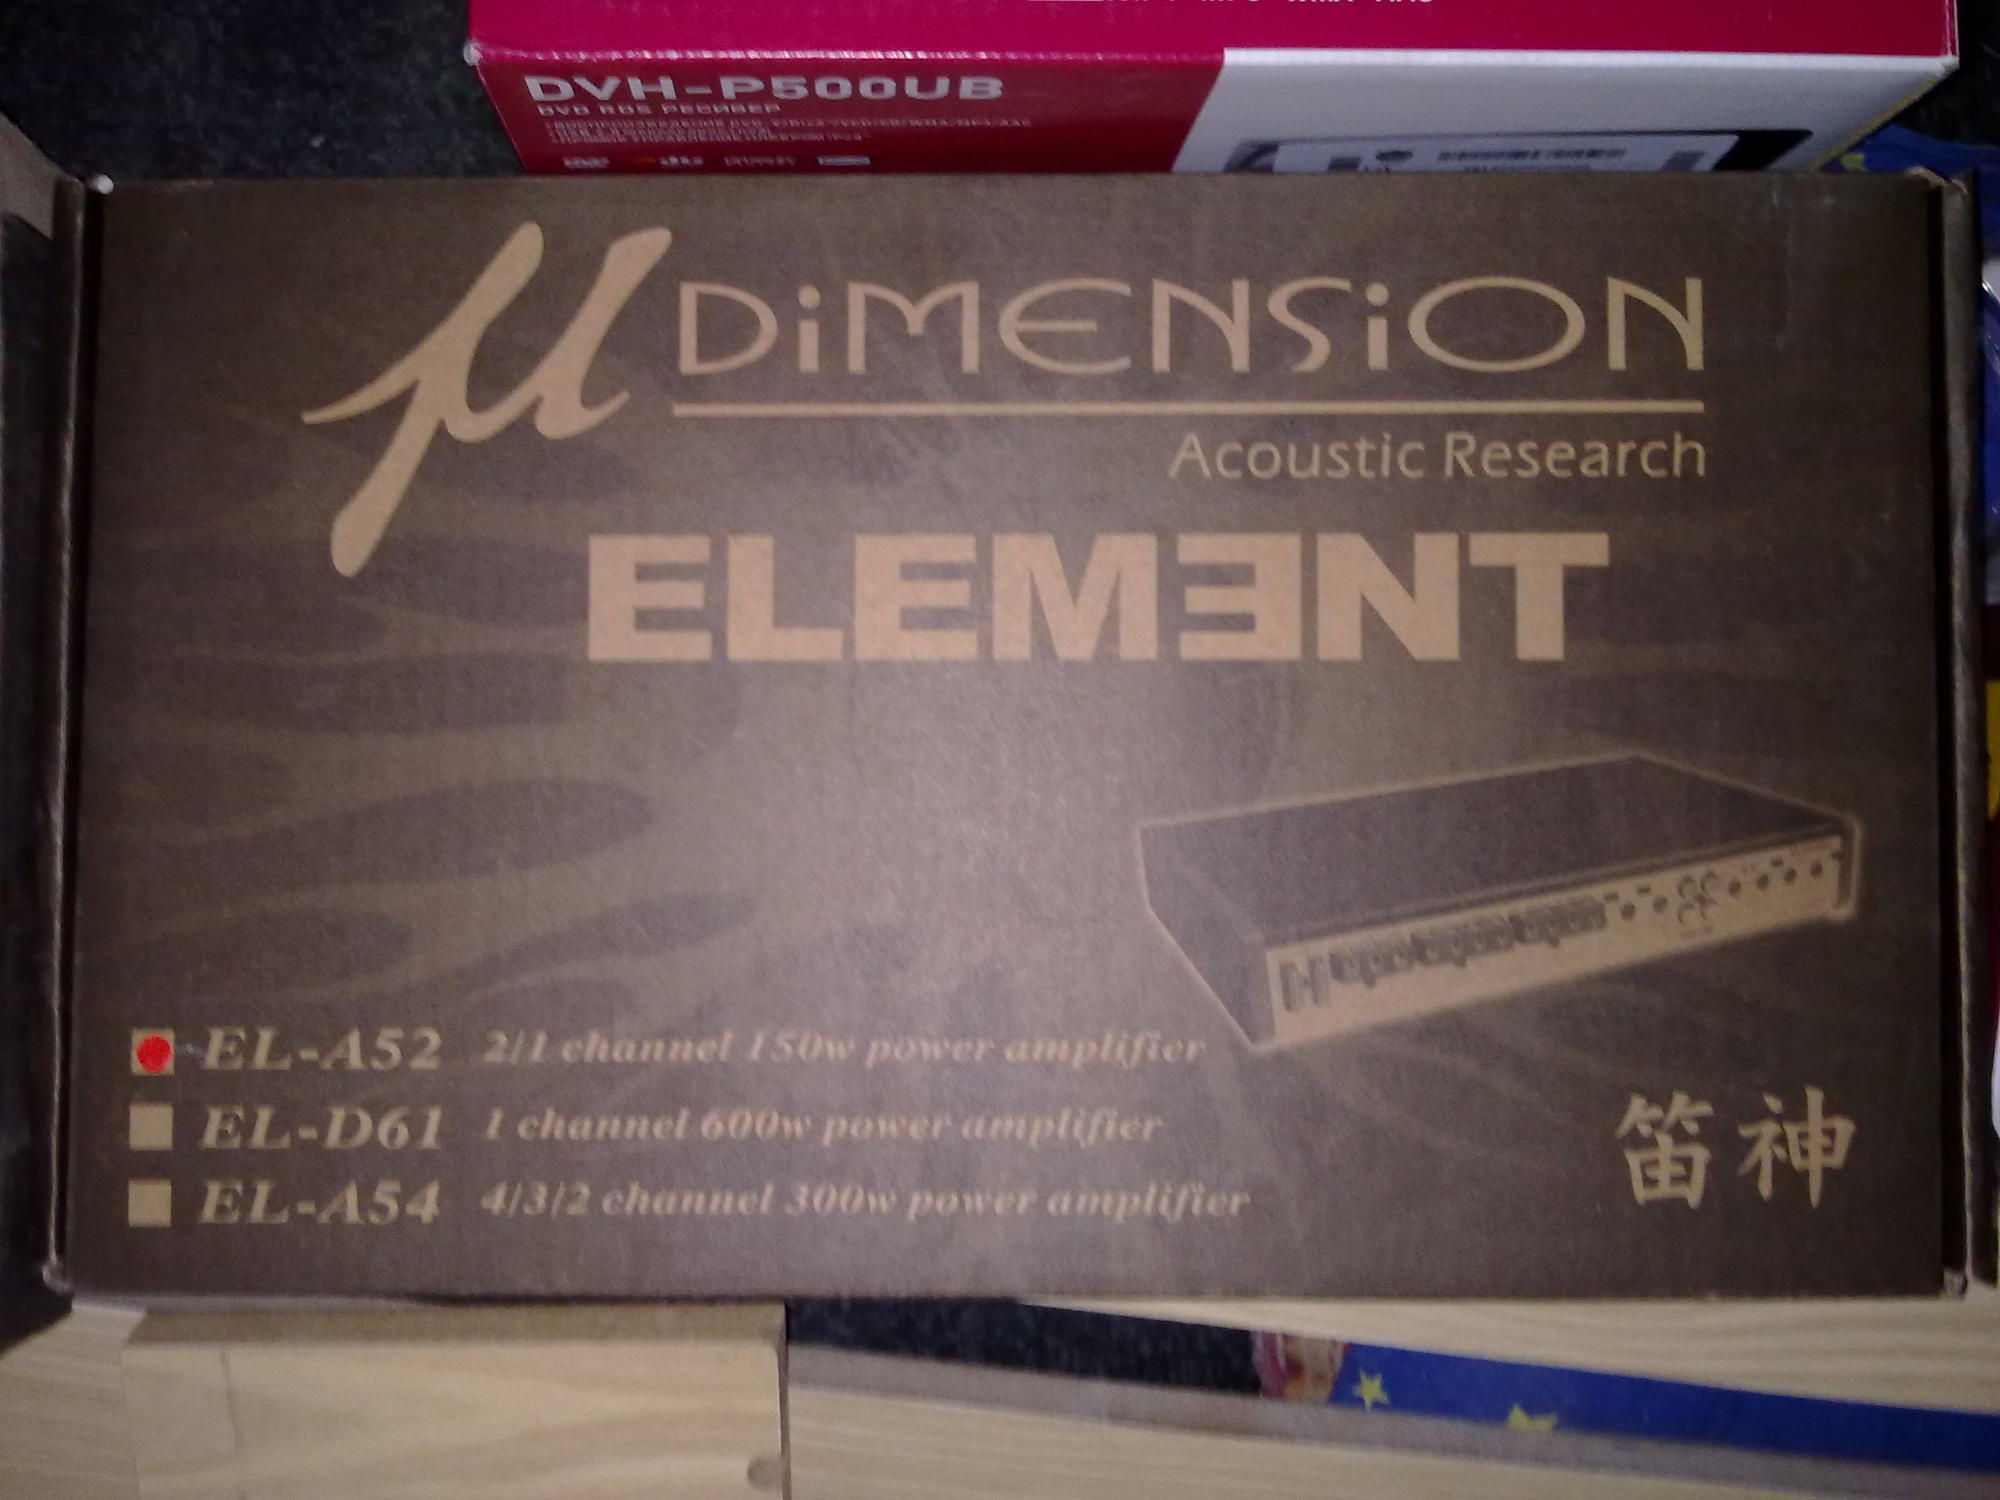 Dimension element. U-Dimension el-d61. DLS m112 характеристики.